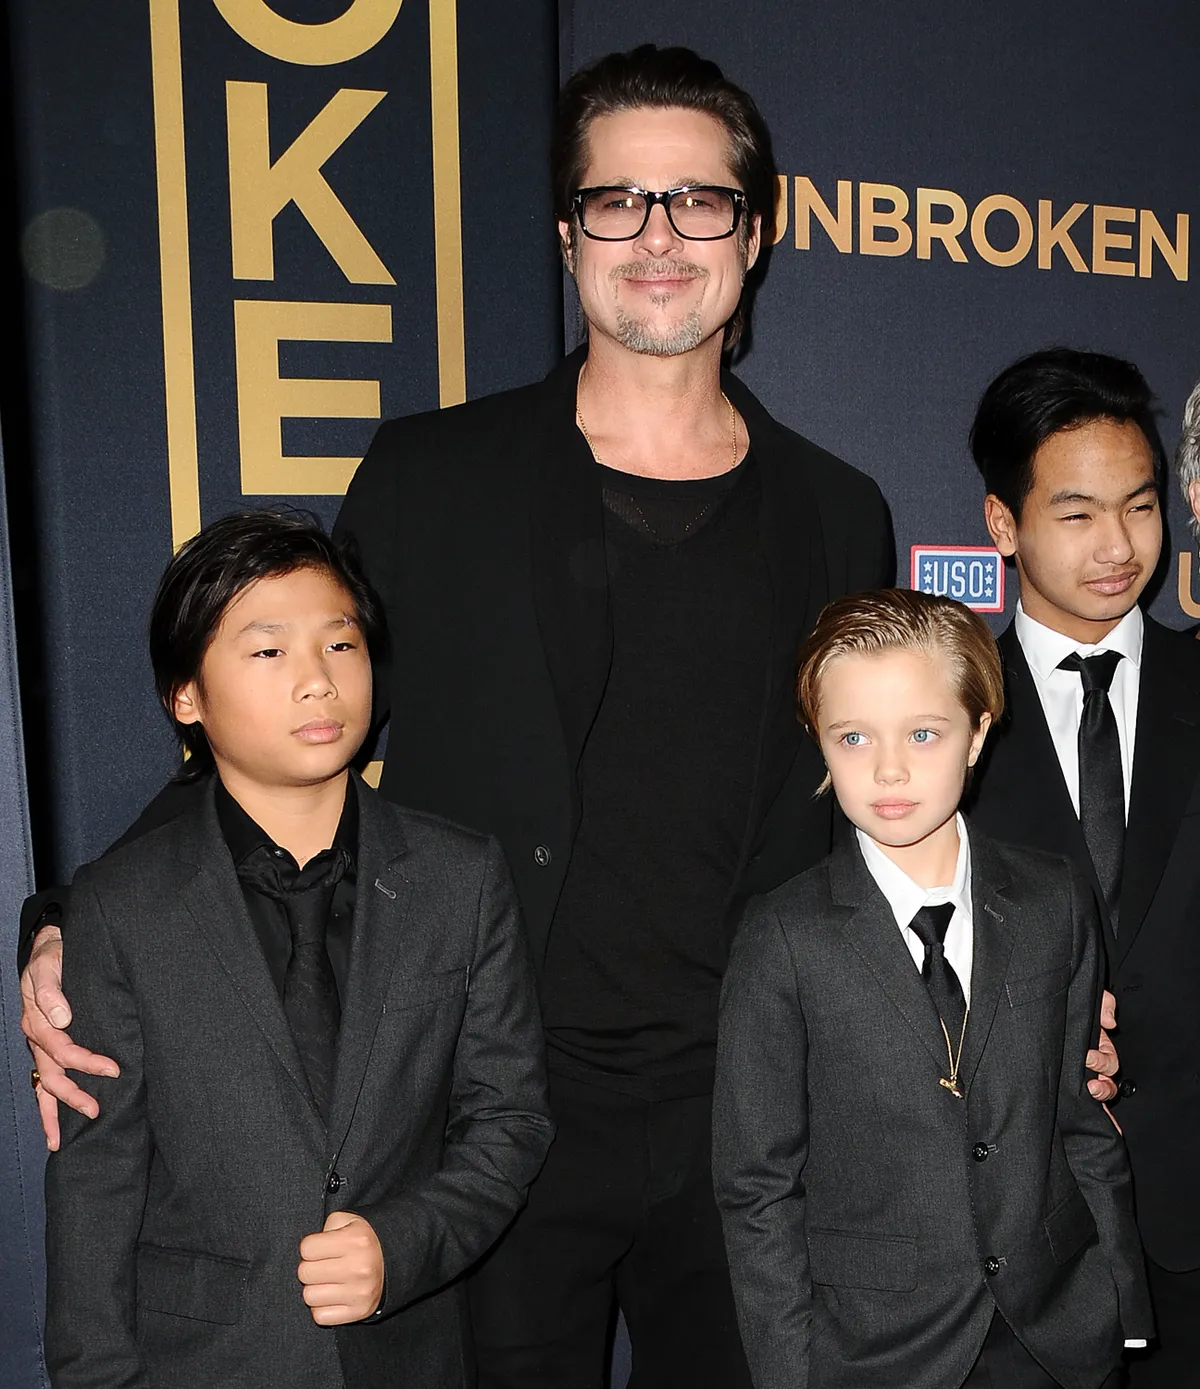 Pax Jolie-Pitt, Brad Pitt, Shiloh Jolie-Pitt et Maddox Jolie-Pitt à la première de "Unbroken", 2014 | Source : Getty Images